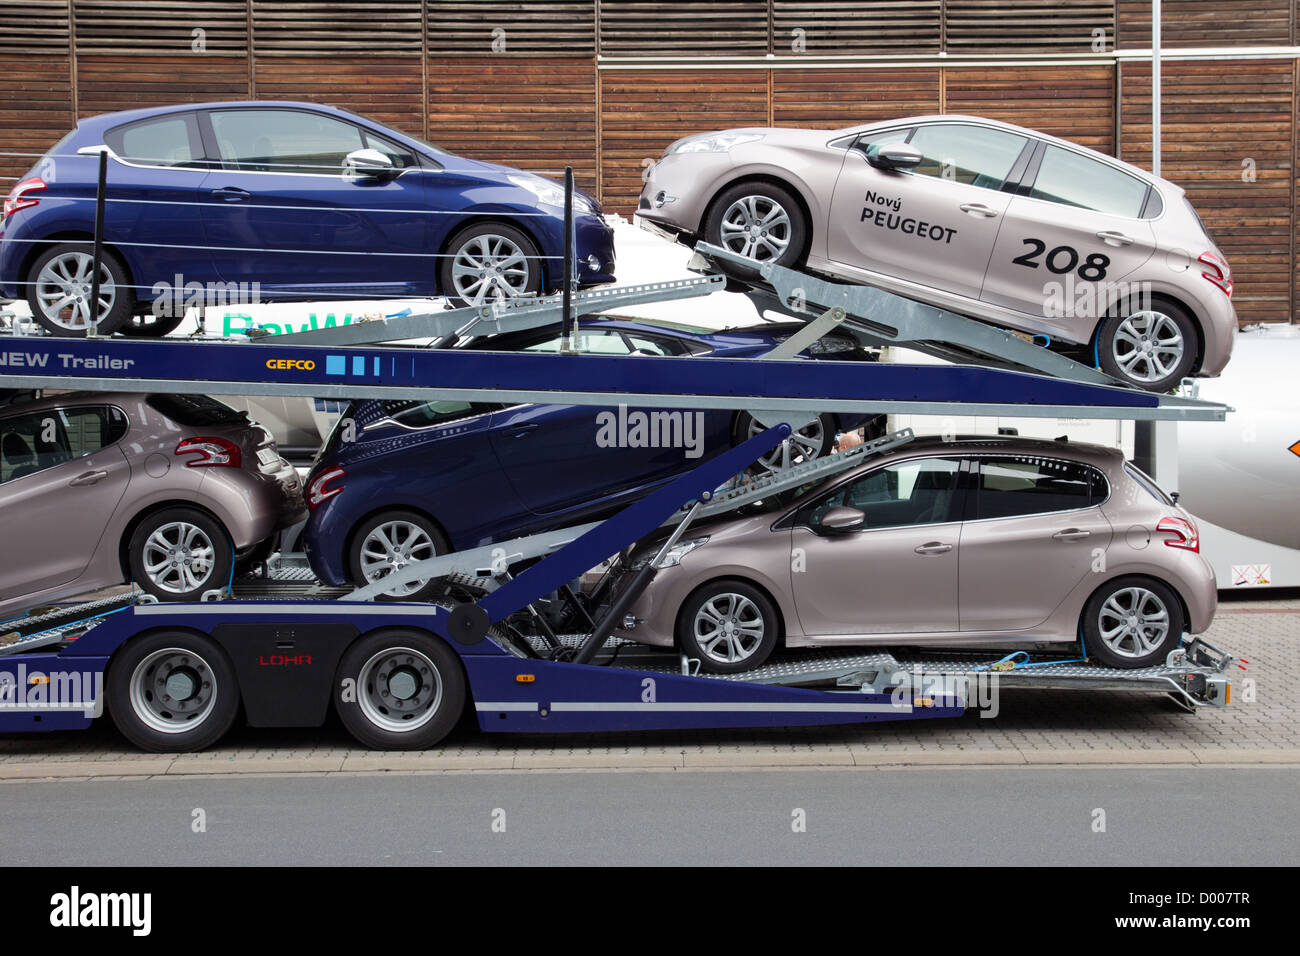 Peugeot nutzfahrzeuge -Fotos und -Bildmaterial in hoher Auflösung – Alamy